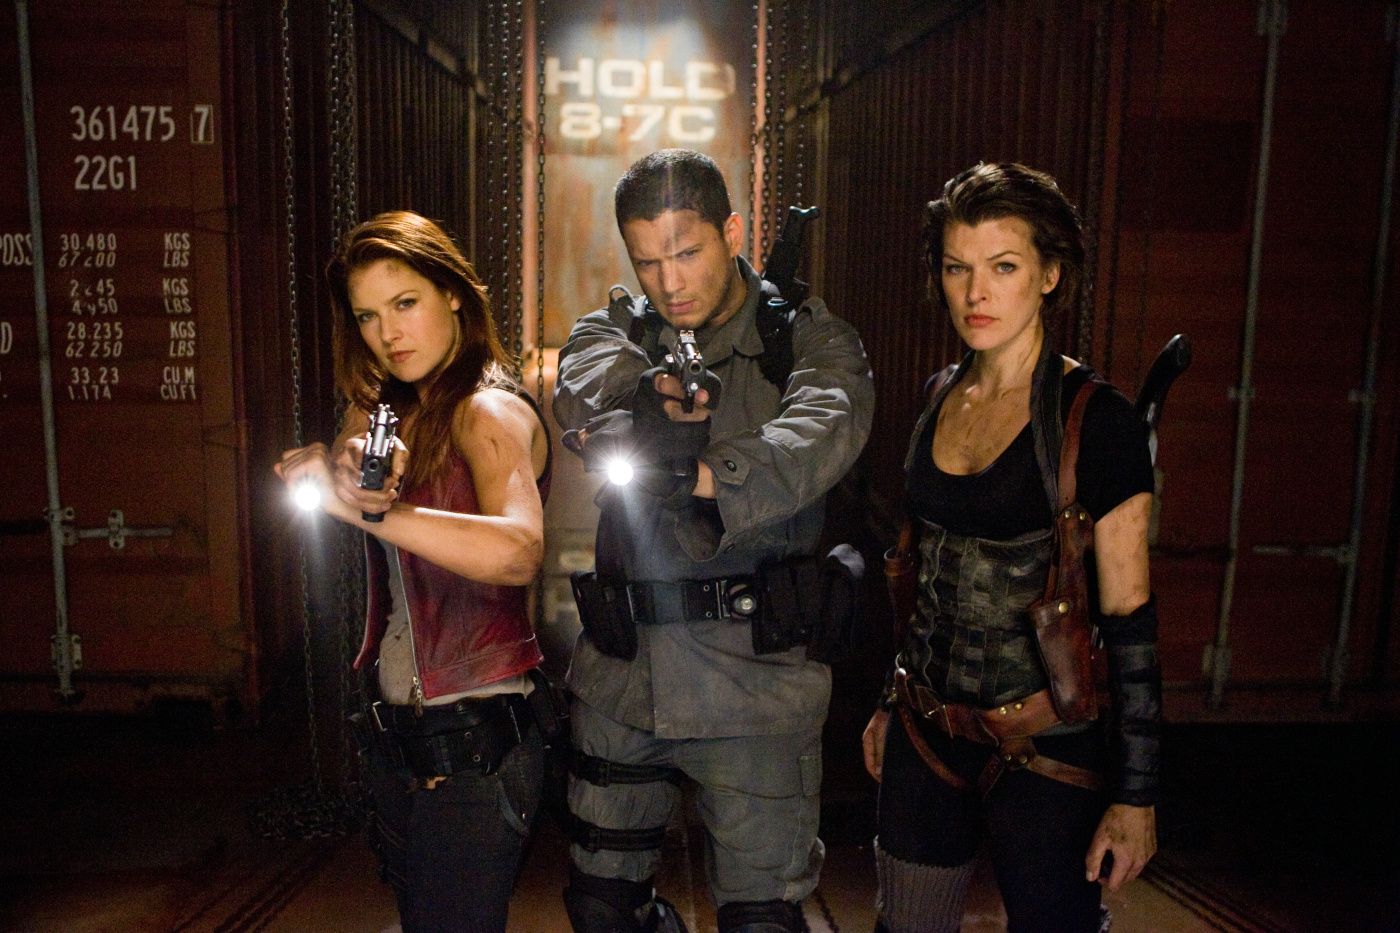 Ali Larter 'Excited' for 'Resident Evil: The Final Chapter